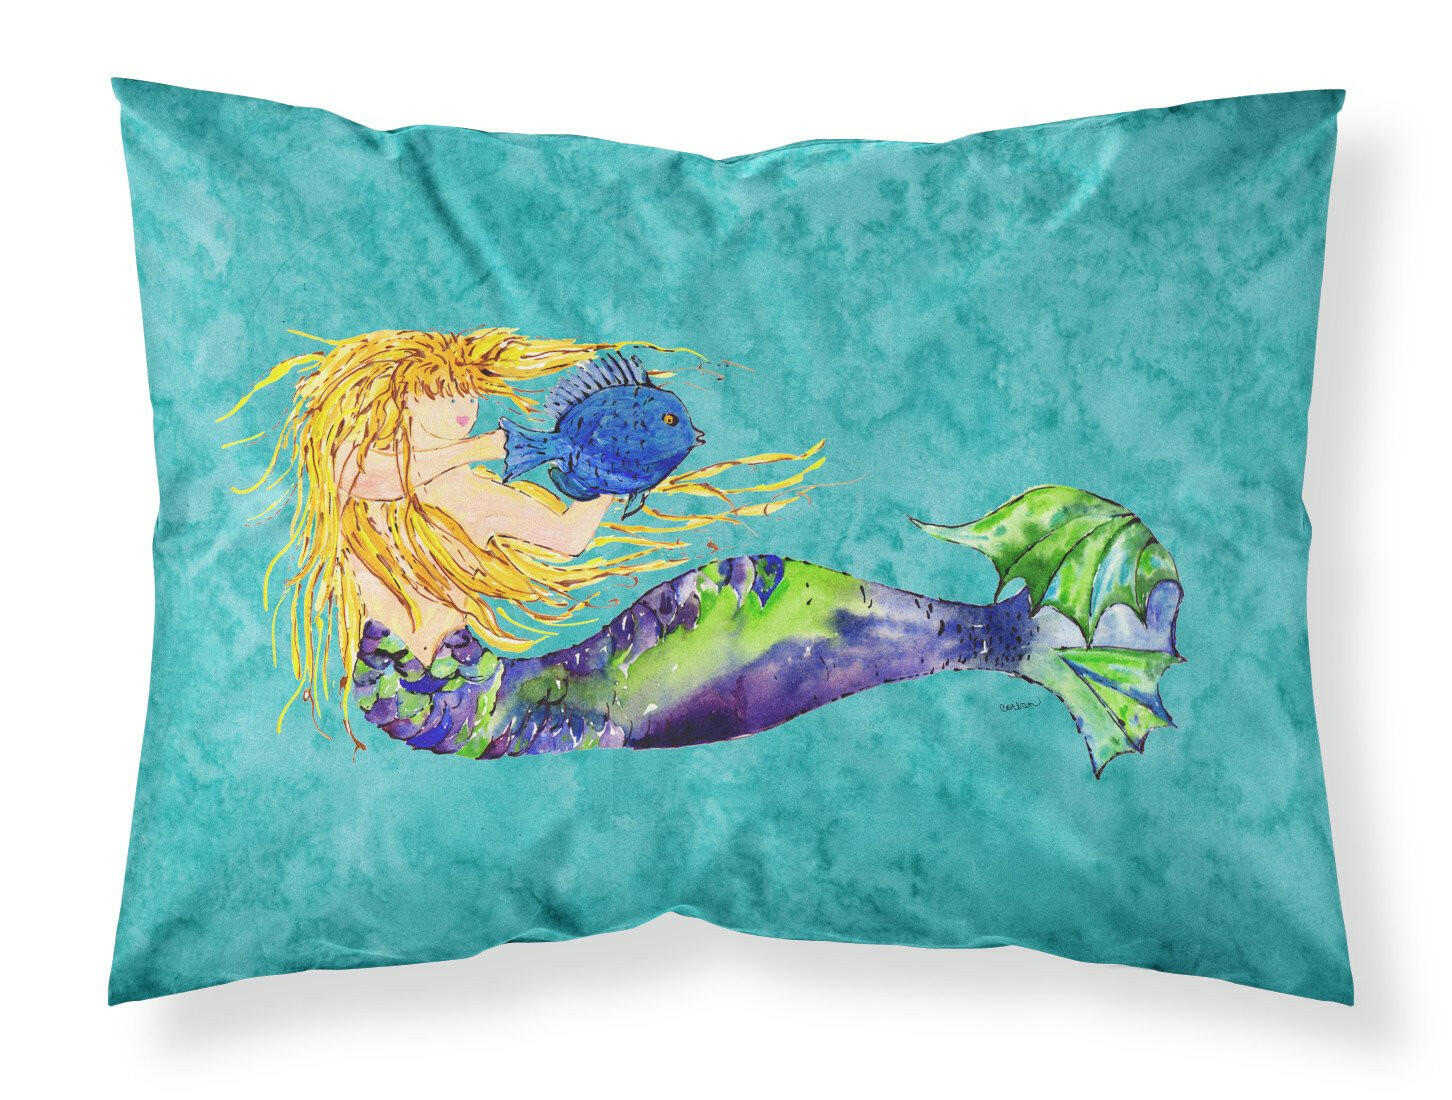 Blonde Mermaid on Teal Fabric Standard Pillowcase 8724PILLOWCASE by Caroline's Treasures